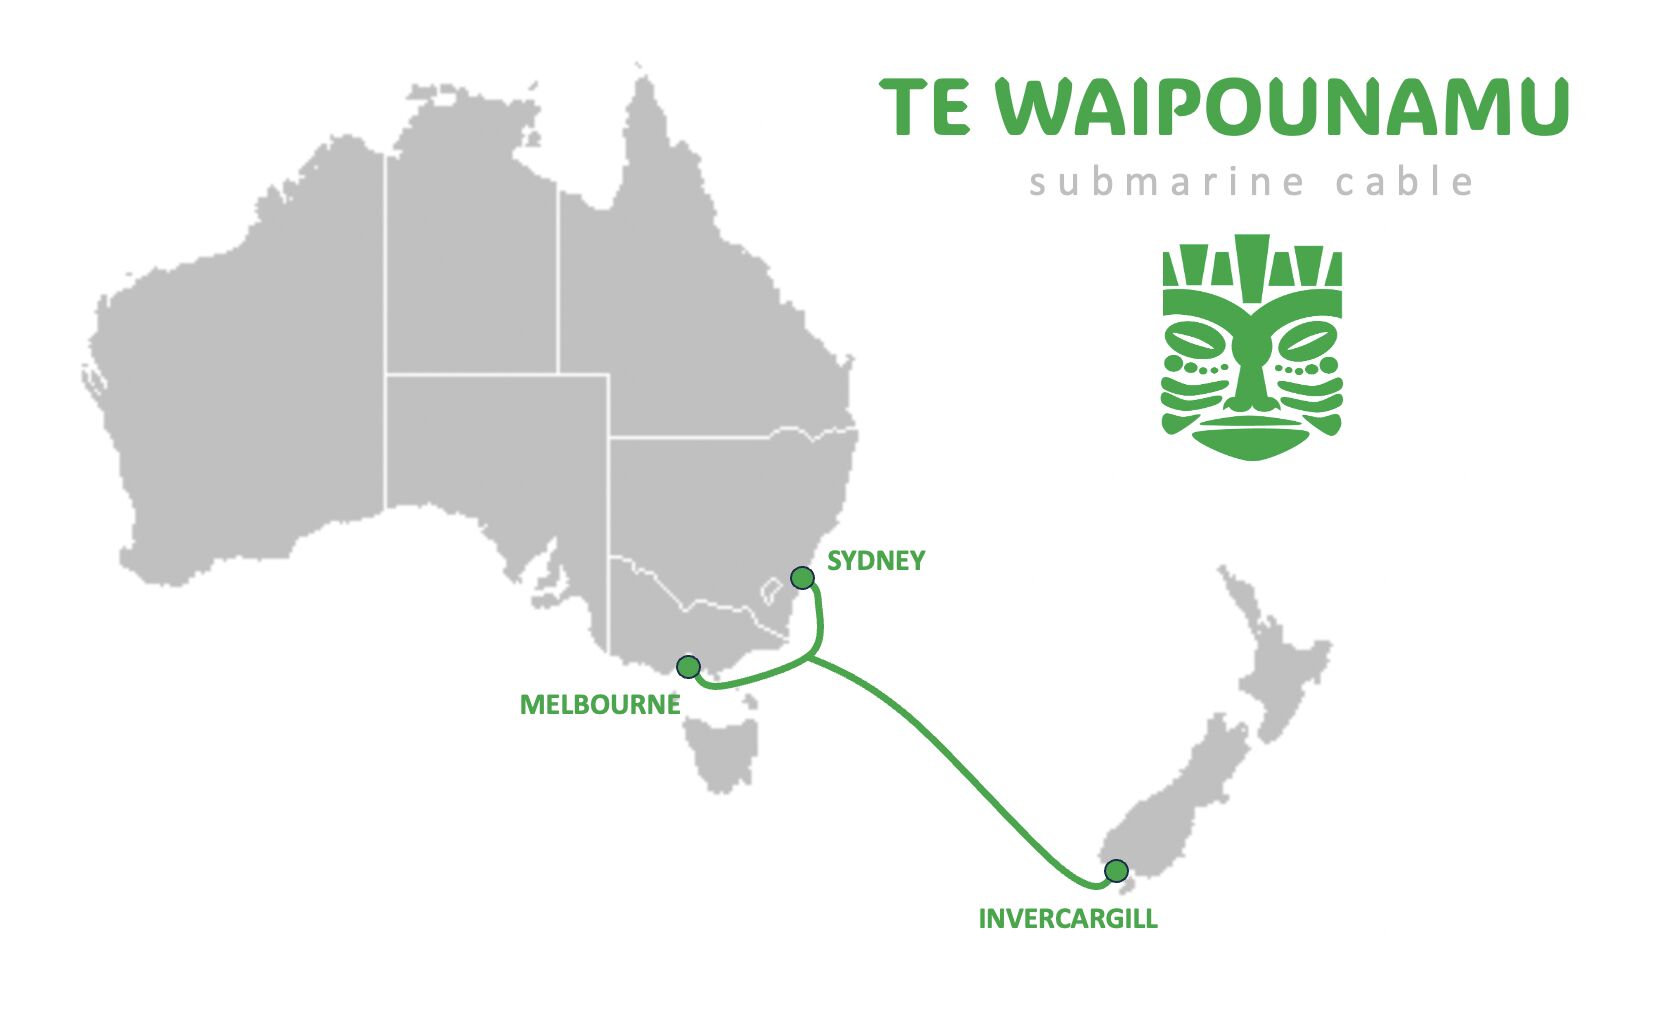 Te Waipounamu: The New Digital Bridge Between New Zealand and Australia